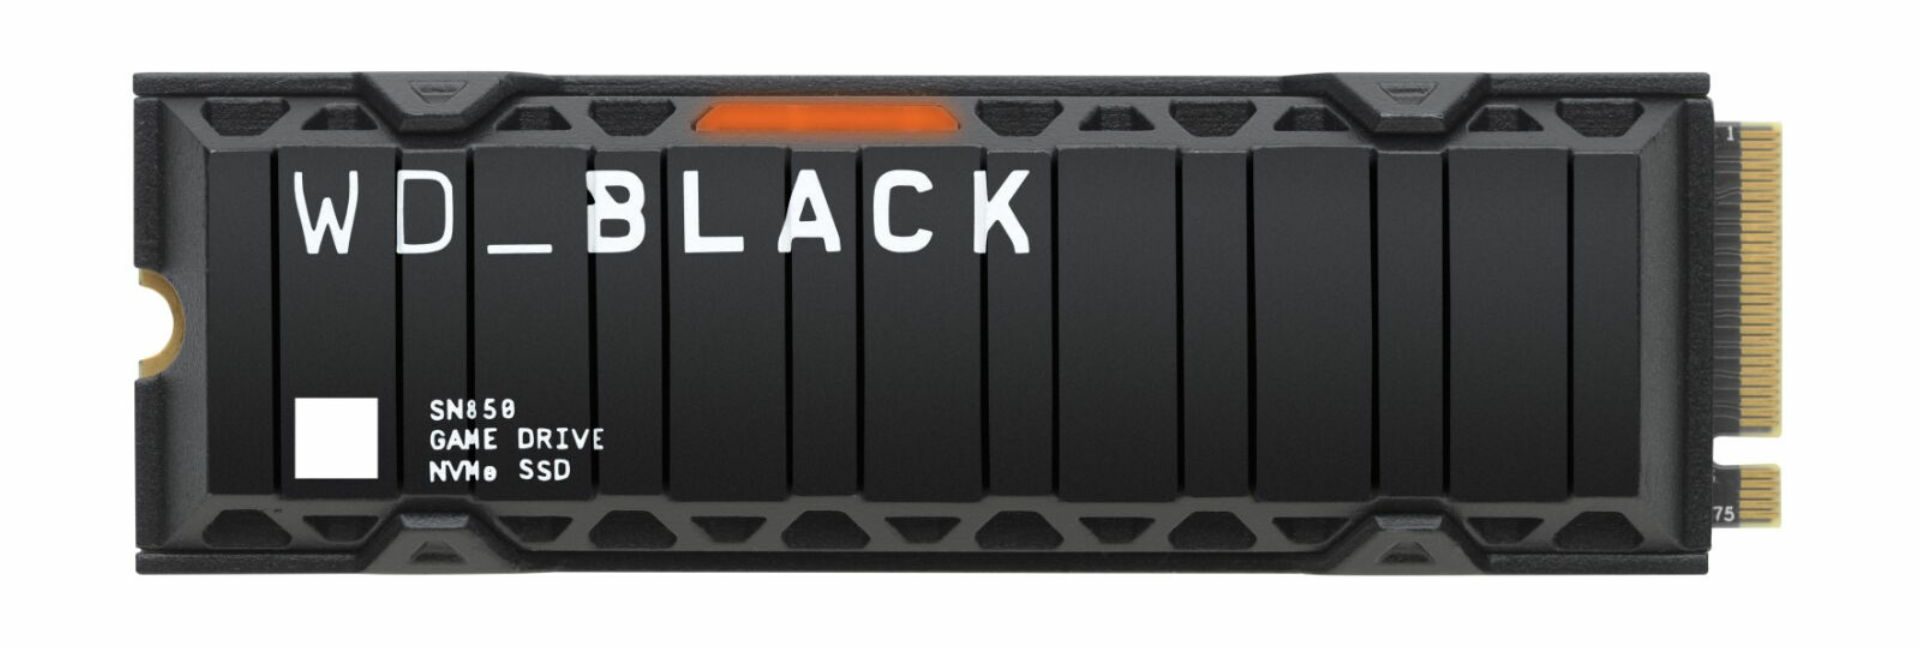 WD_BLACK 2TB SN850